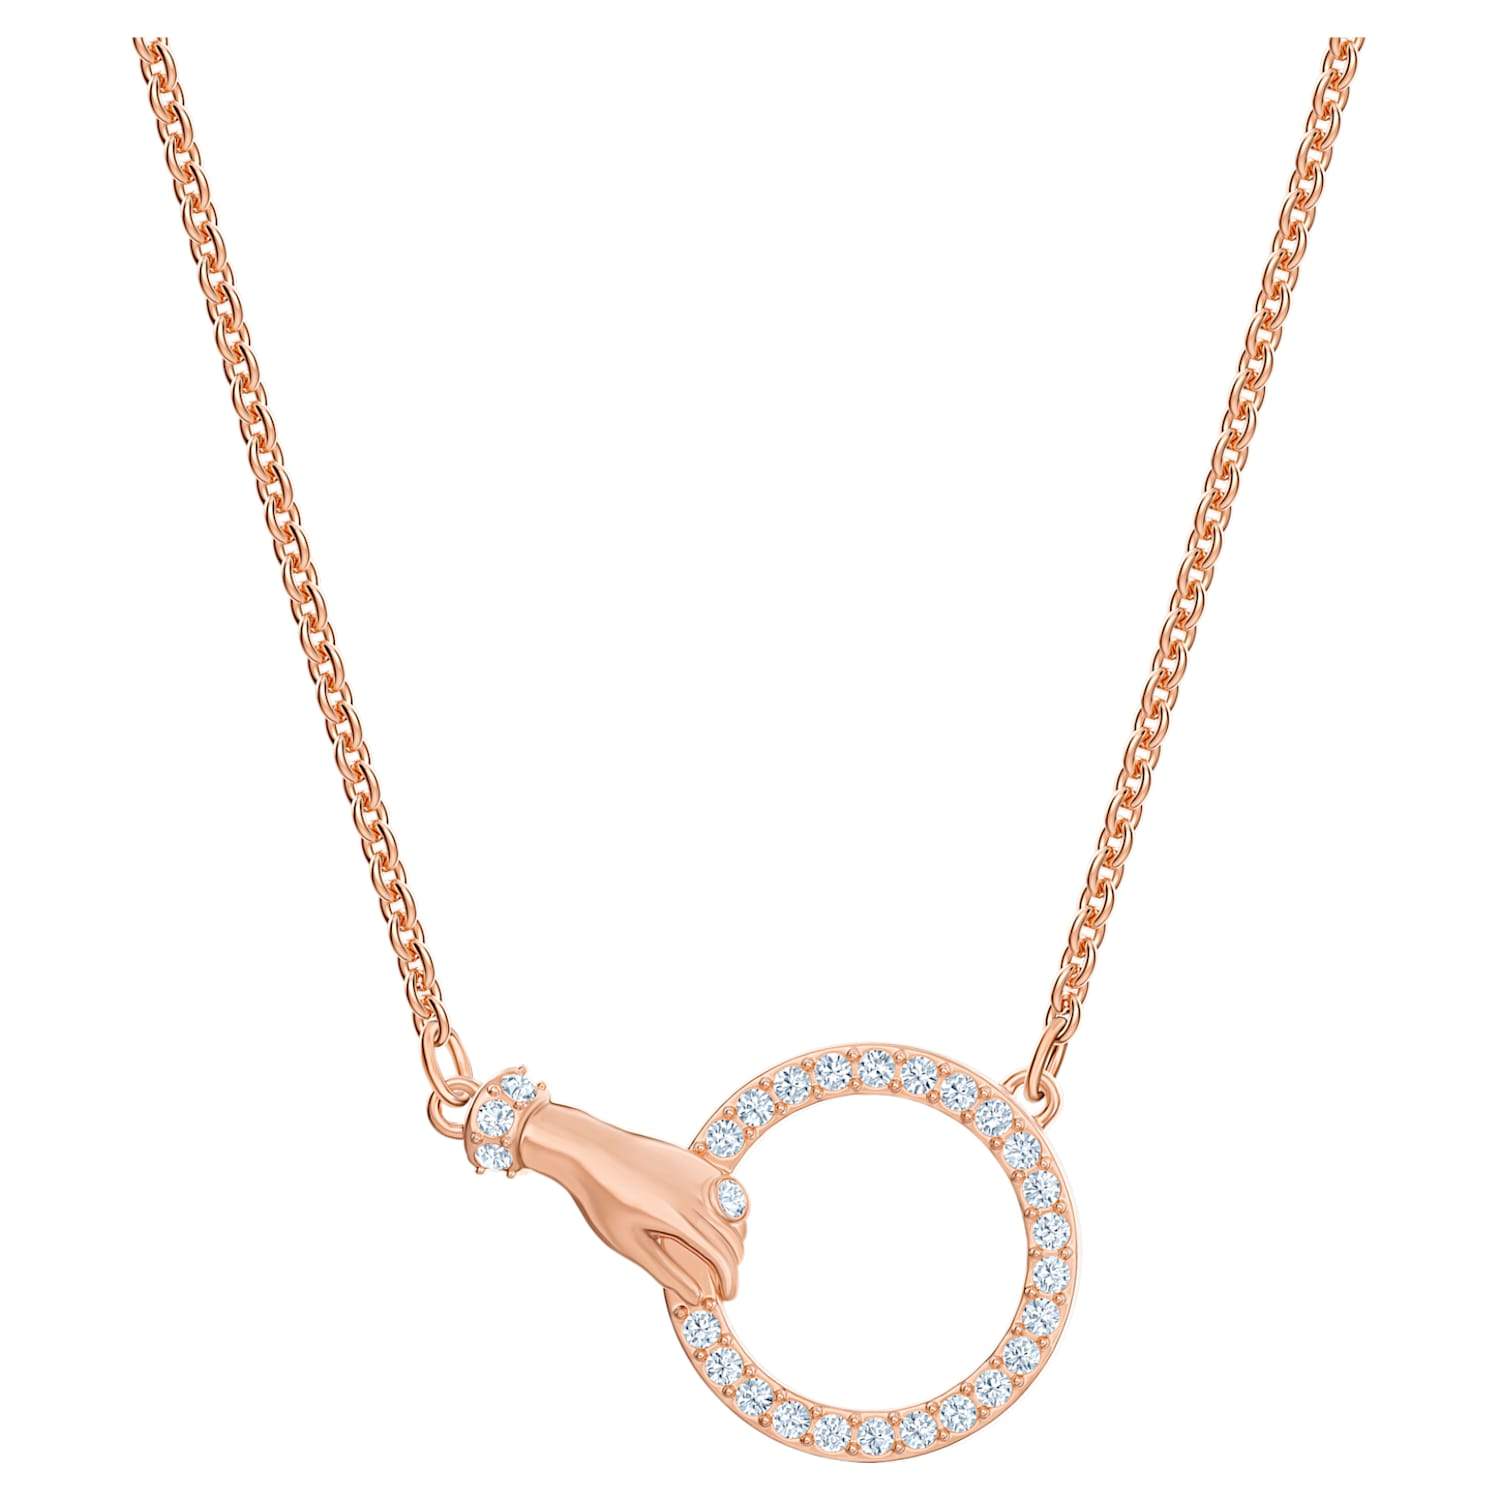 SWAROVSKI Symbolic Hand Necklace - White & Rose Gold #5489573